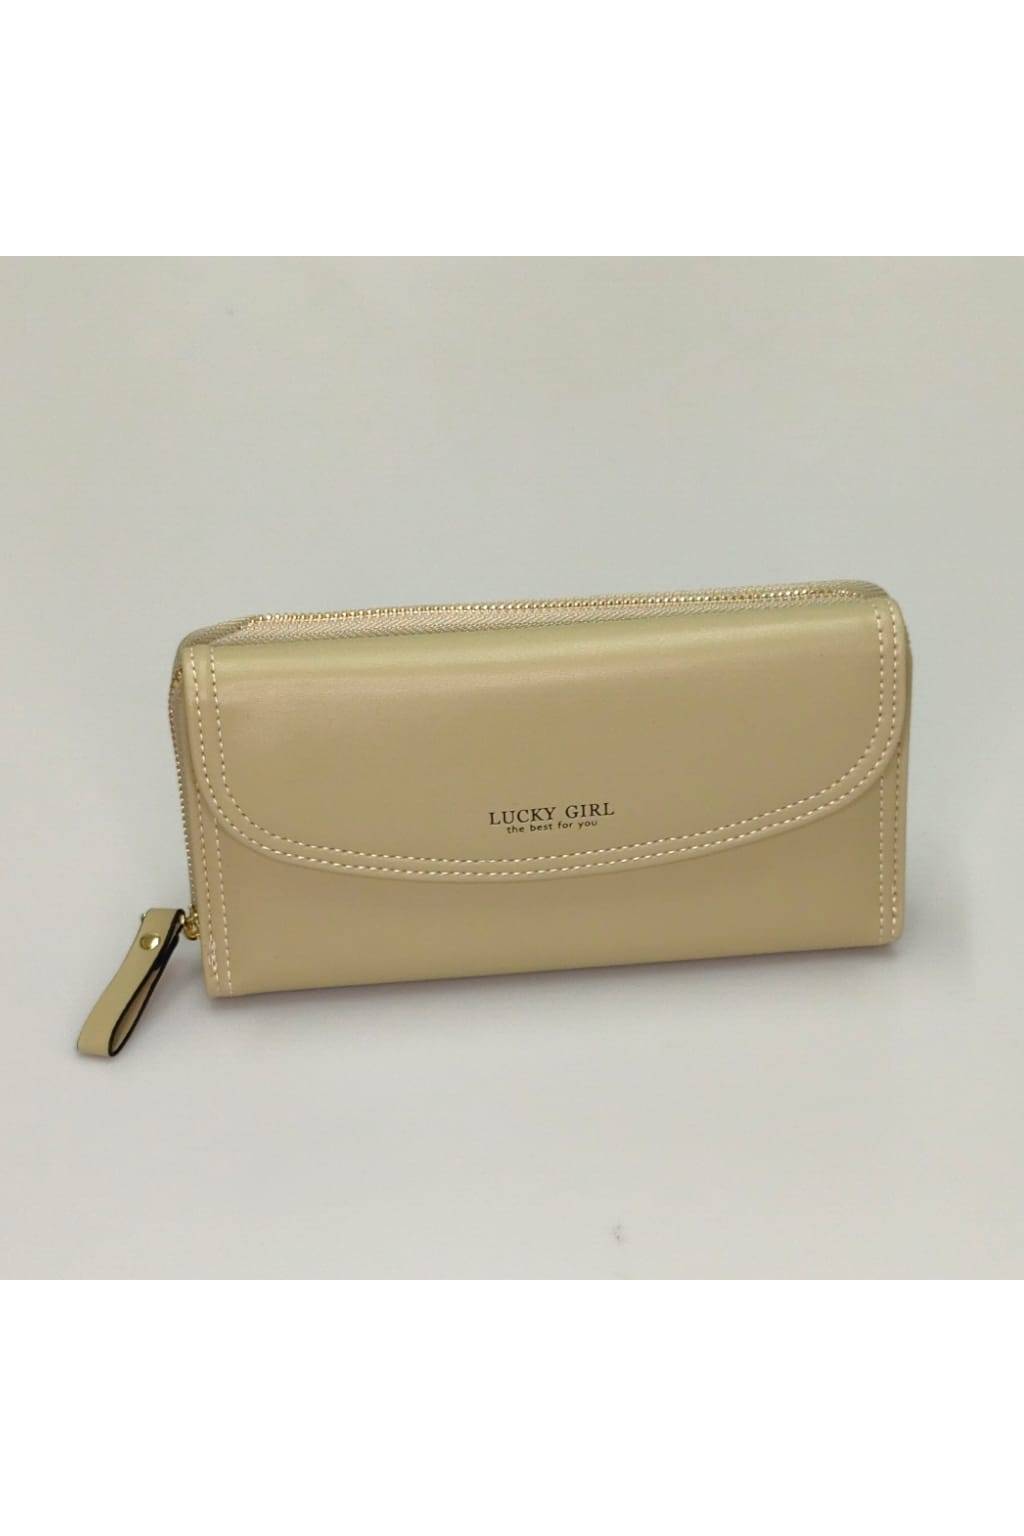 Dámska peňaženka ZY 21579 zelená www.kabelky vypredaj (2)